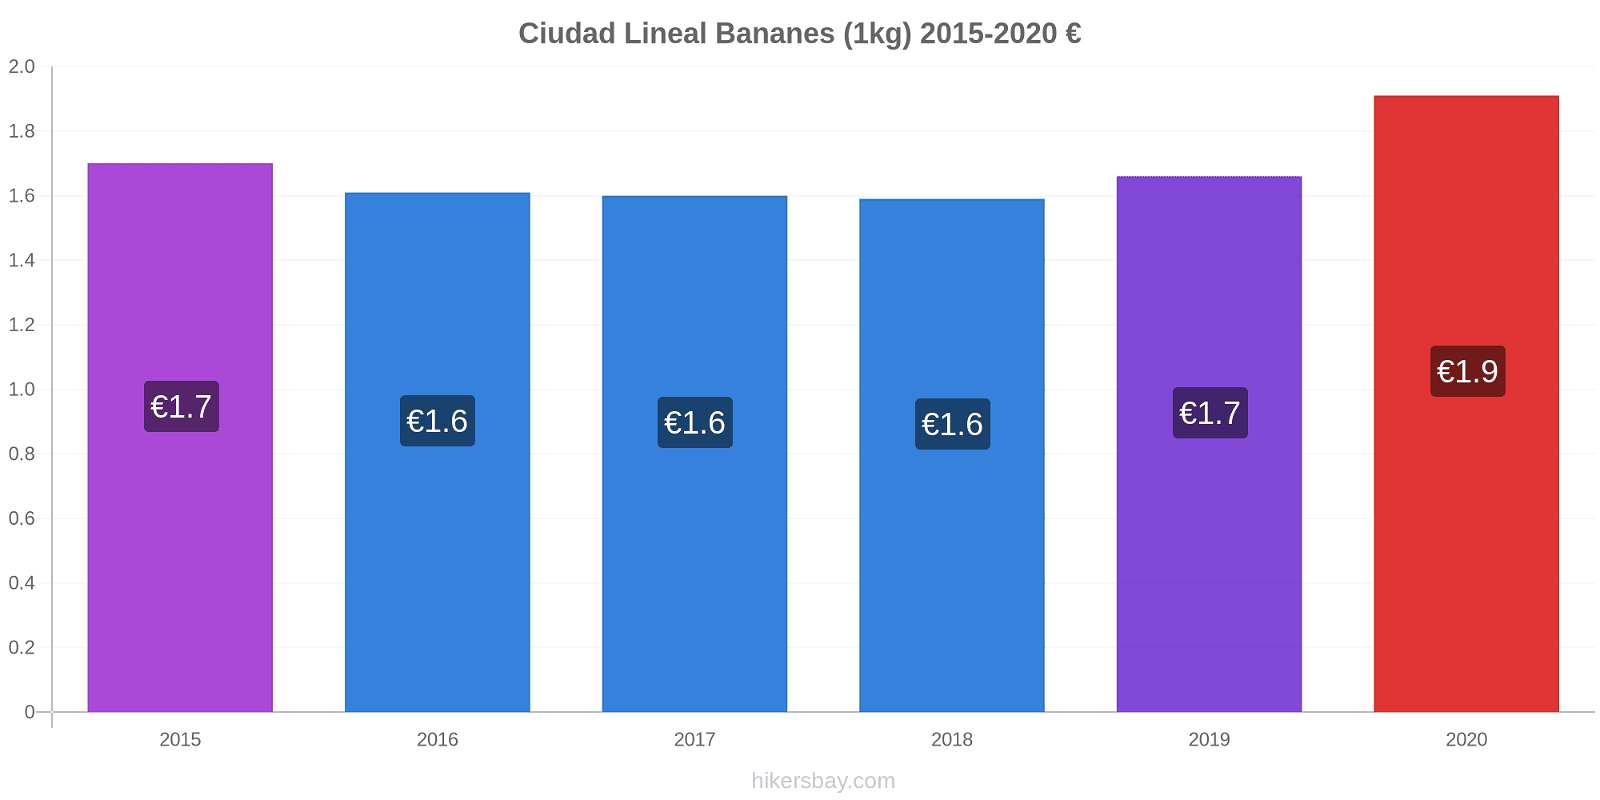 Ciudad Lineal changements de prix Bananes (1kg) hikersbay.com